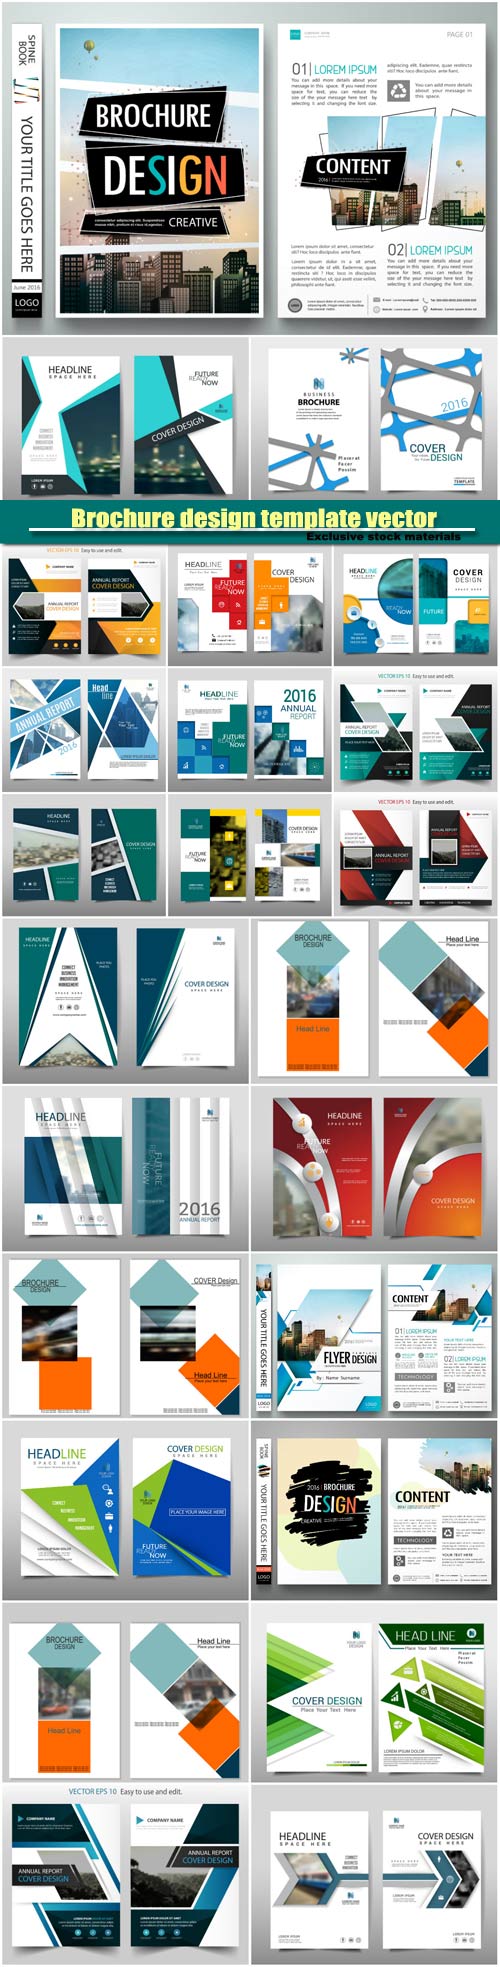 Brochure design template vector layout, cover book portfolio presentation poster